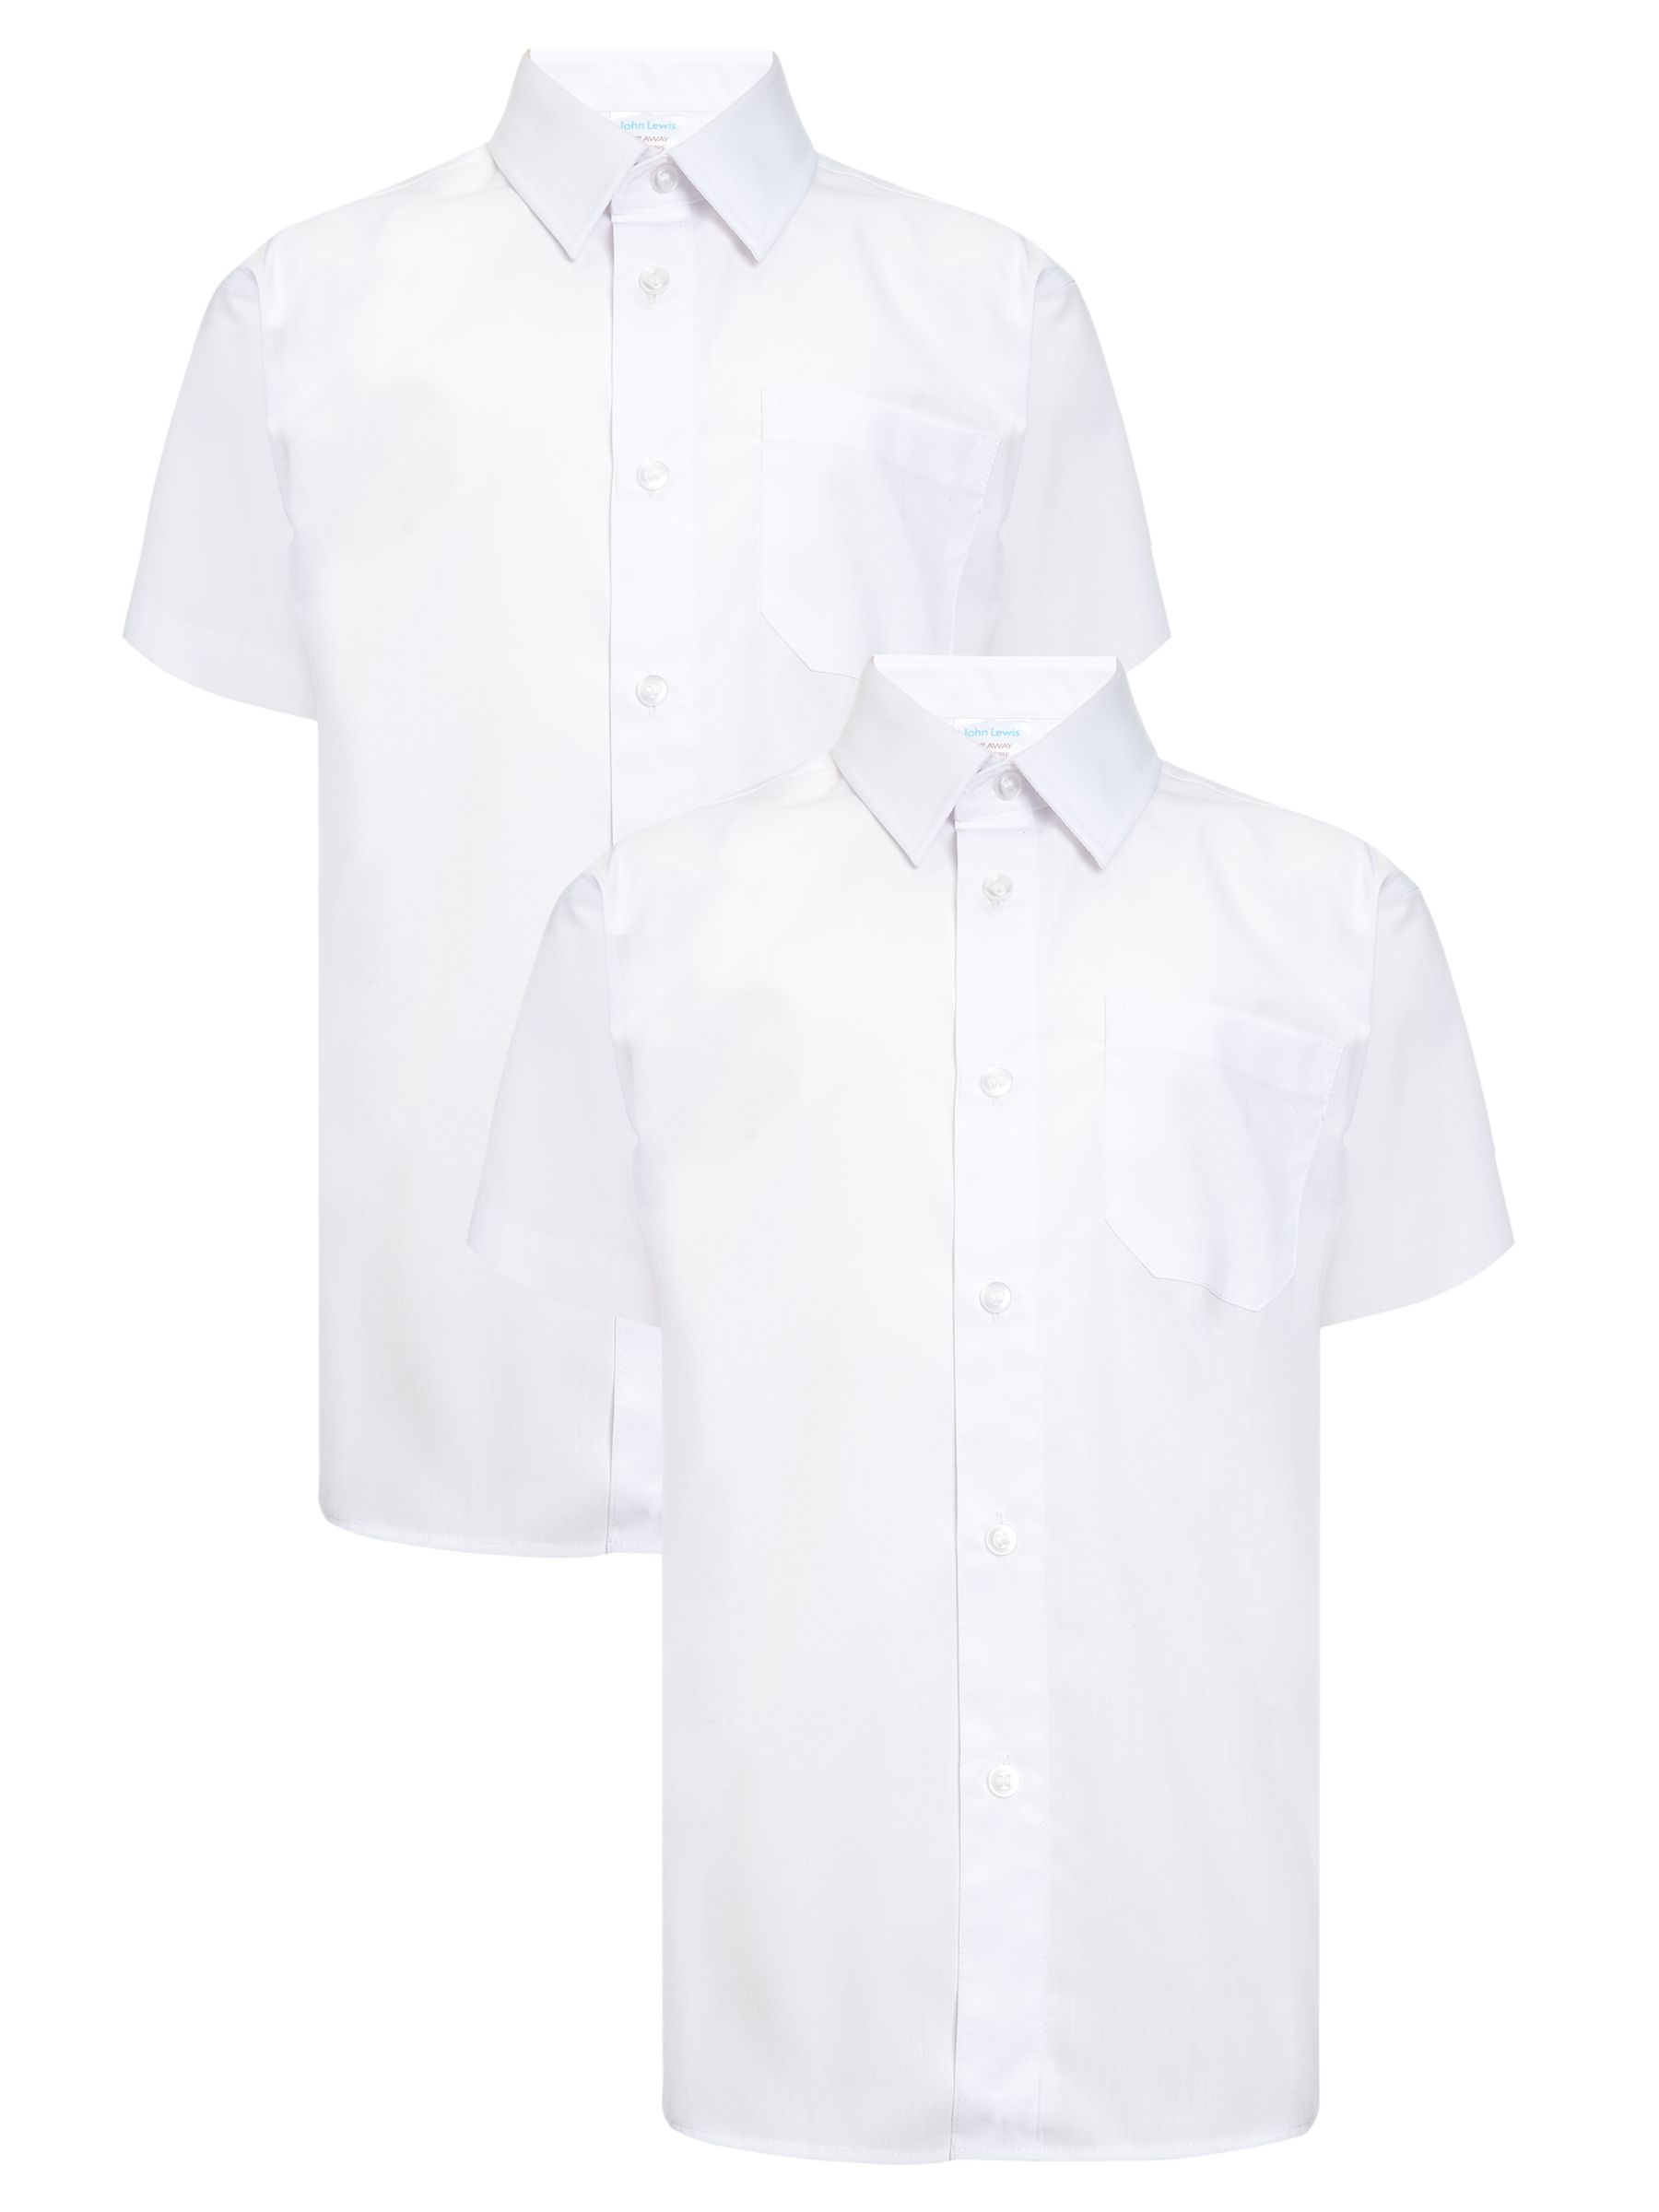 John Lewis & Partners Boys' Short Sleeve Non-Iron School Shirt, Pack of 2, White